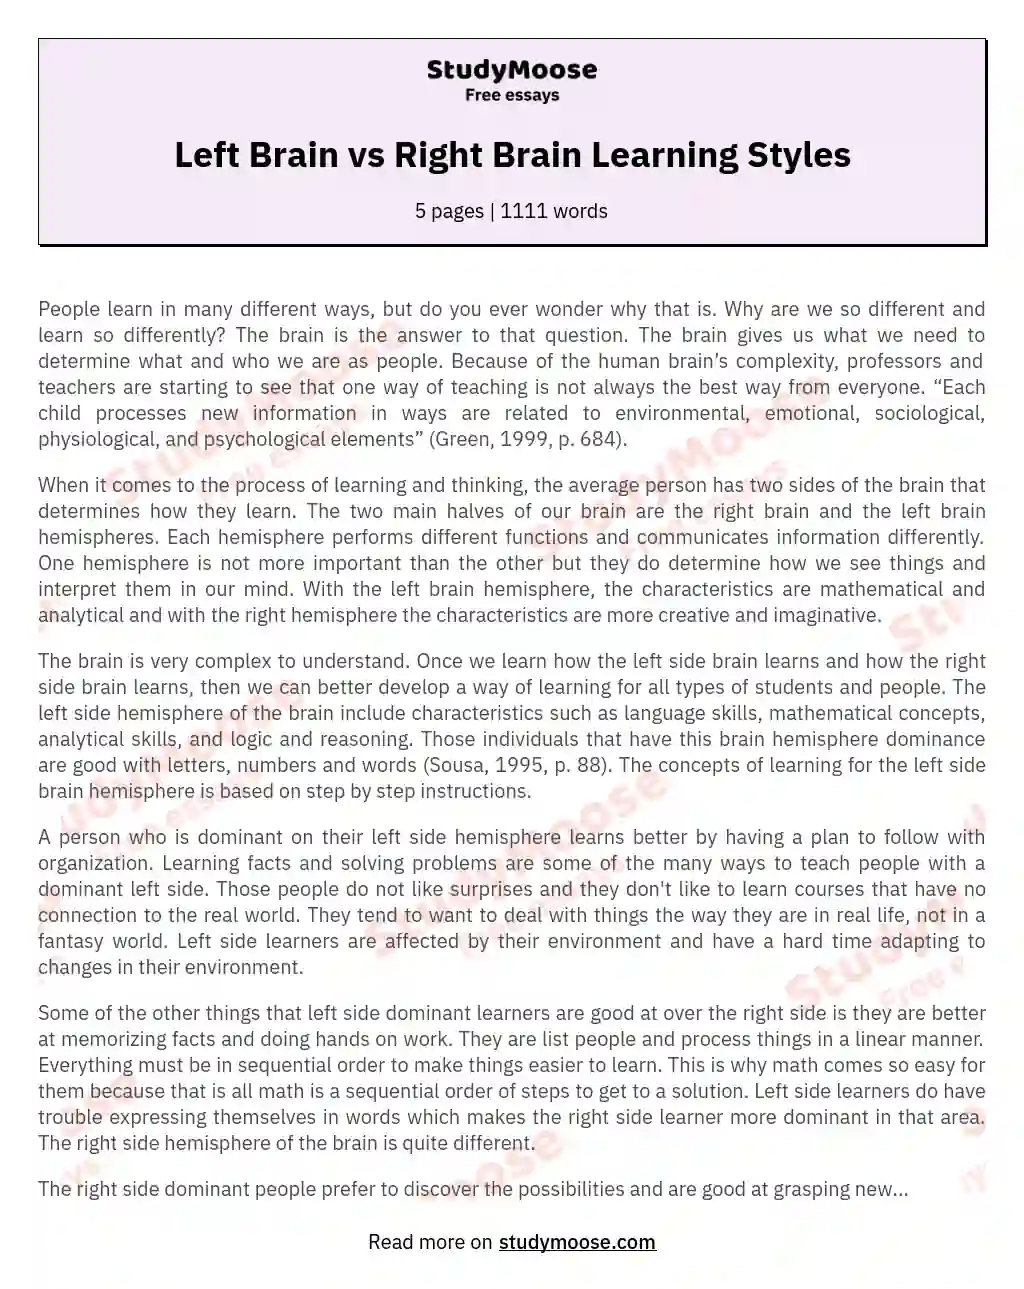 left brain learning styles